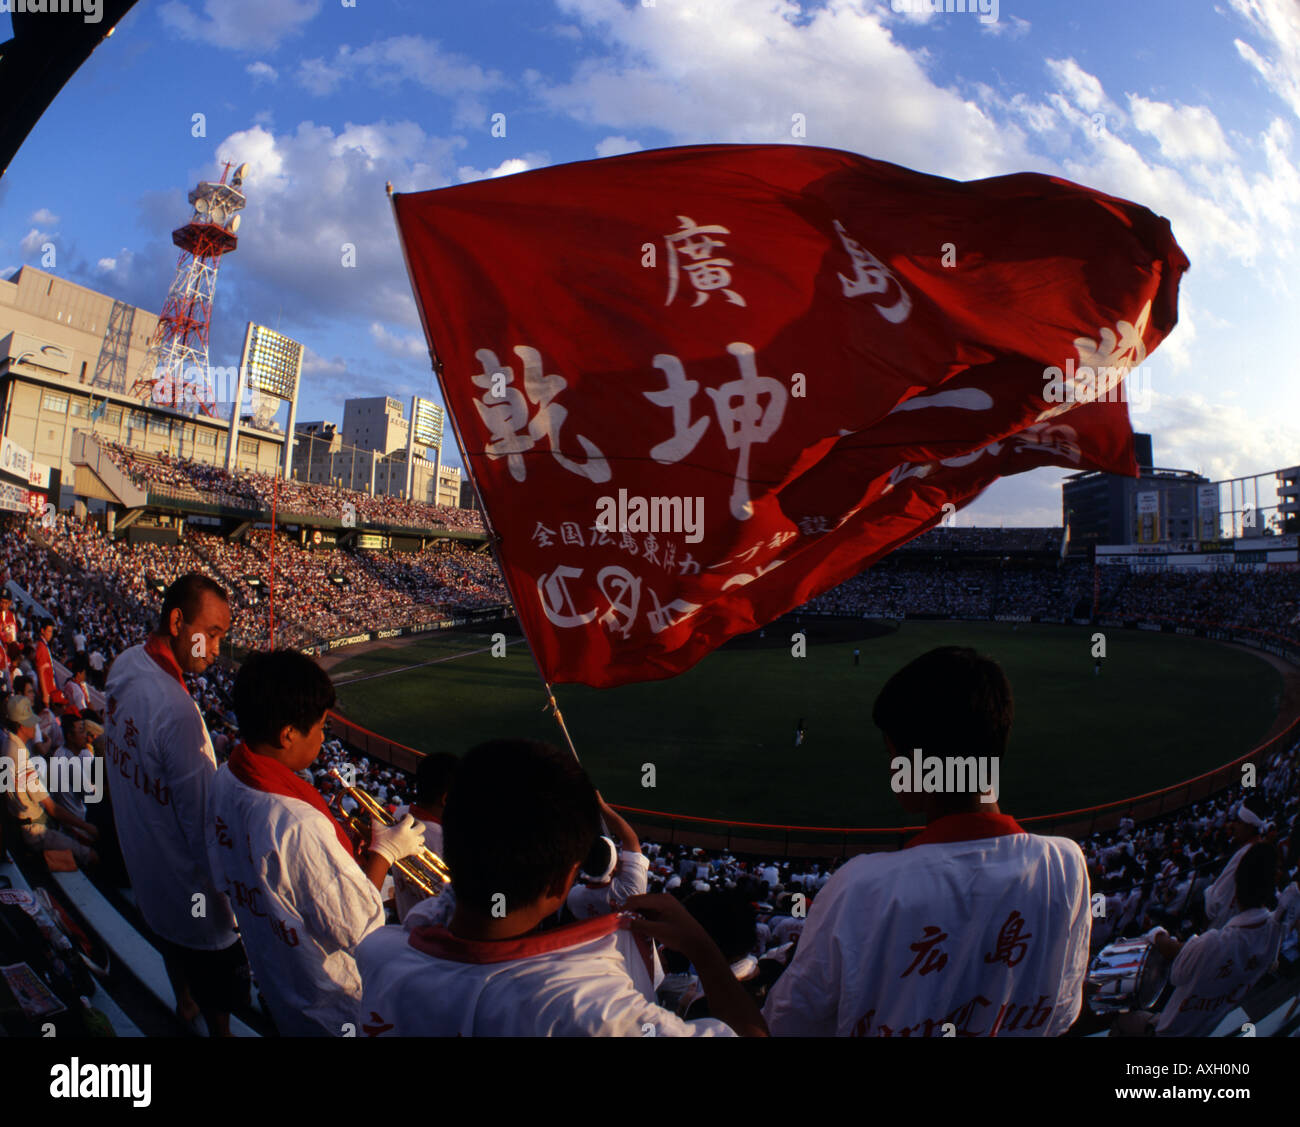 Les fans de baseball japonais d'Hiroshima Hiroshima Carp au stade de baseball Banque D'Images